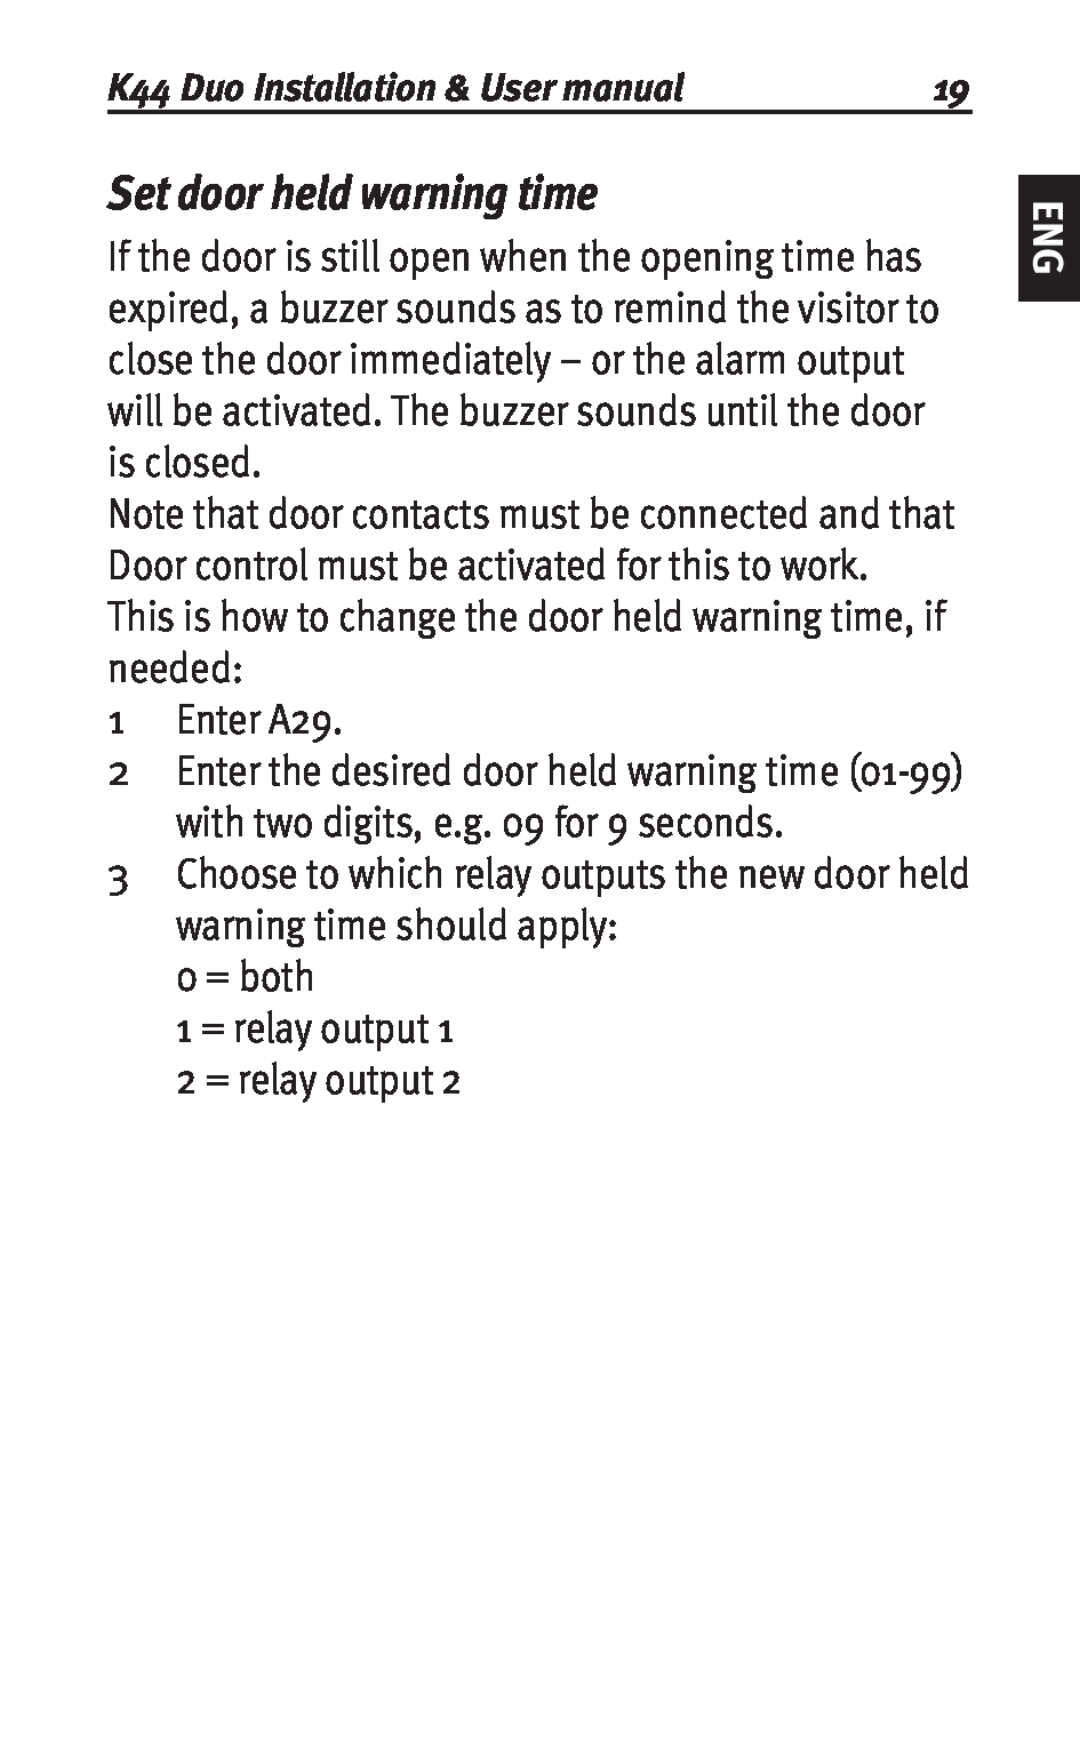 Siemens K44 user manual Set door held warning time 